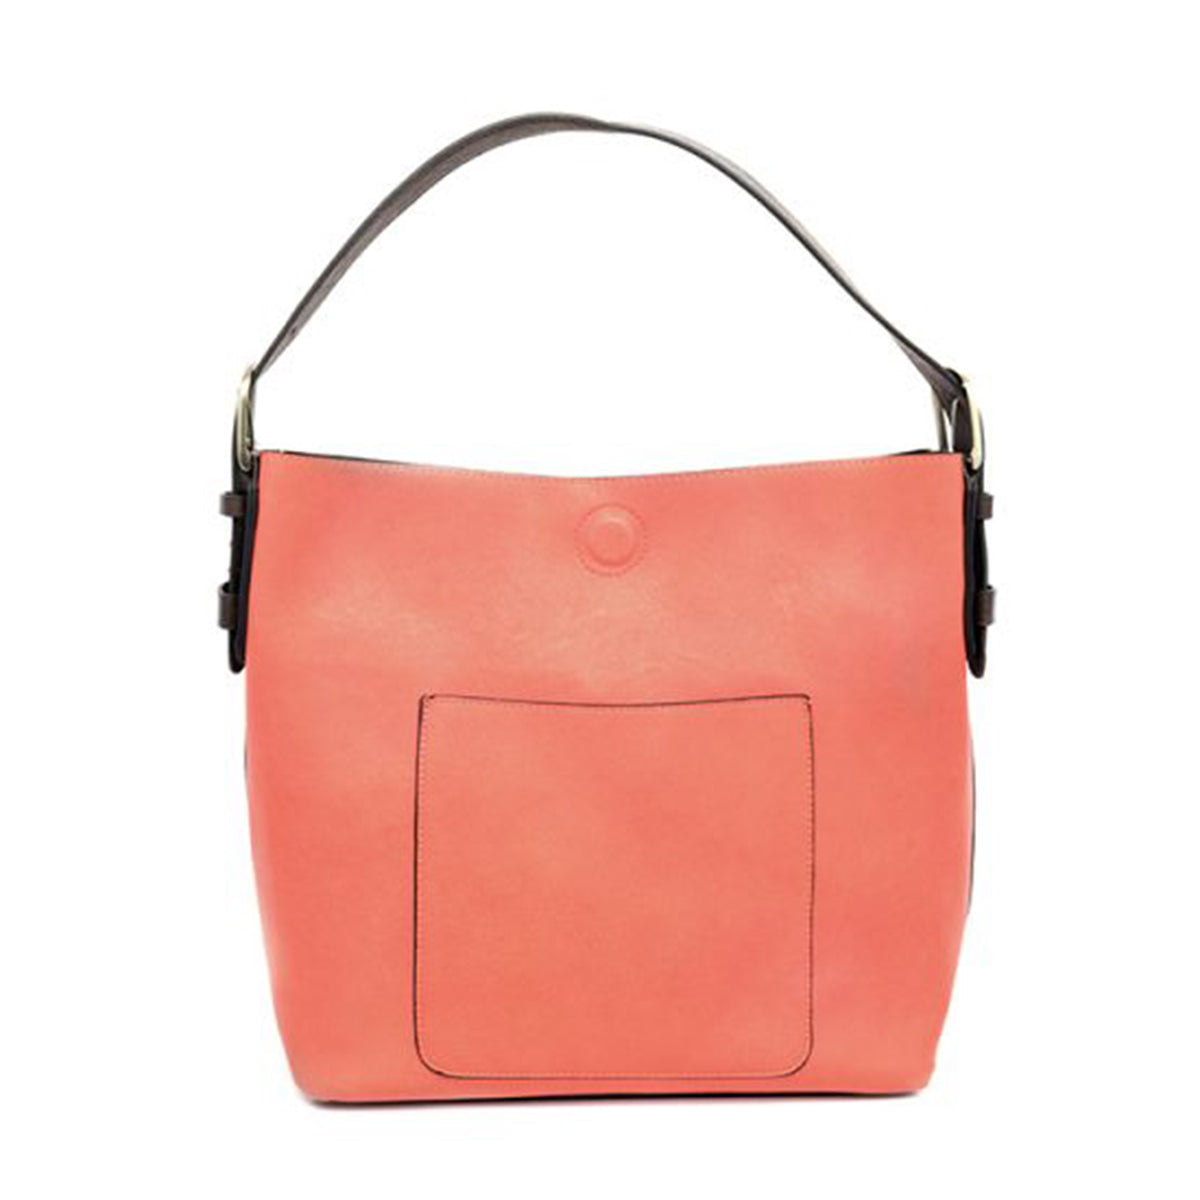 Joy Susan coral-colored vegan leather hobo handbag with a front pocket and black strap.